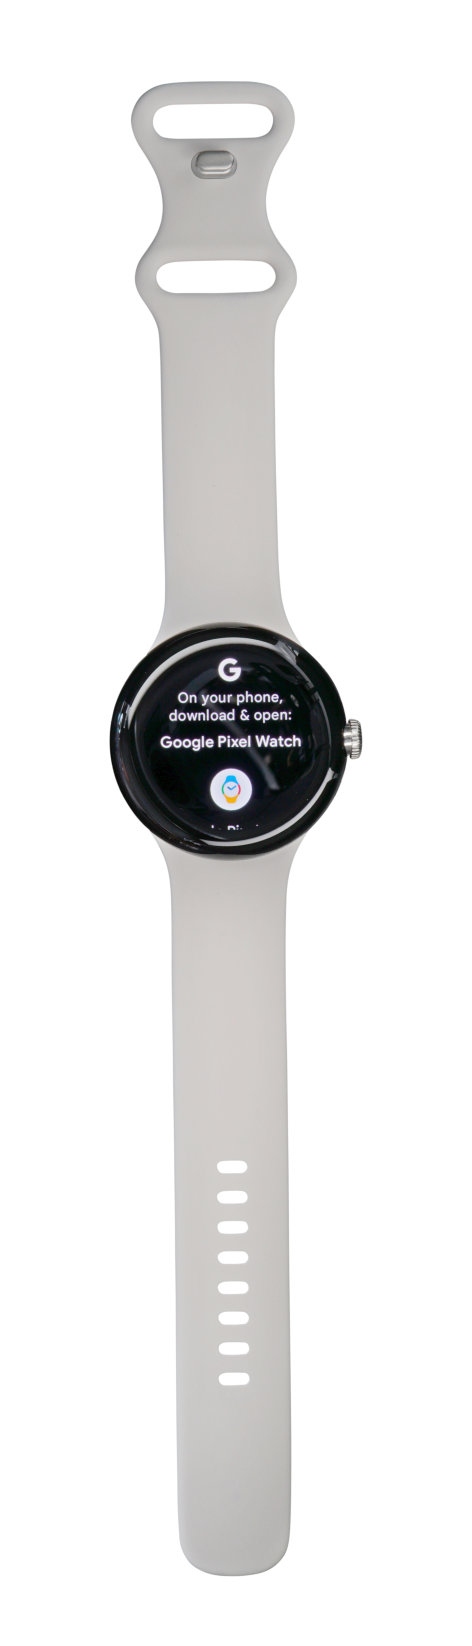 GOOGLE Pixel Watch